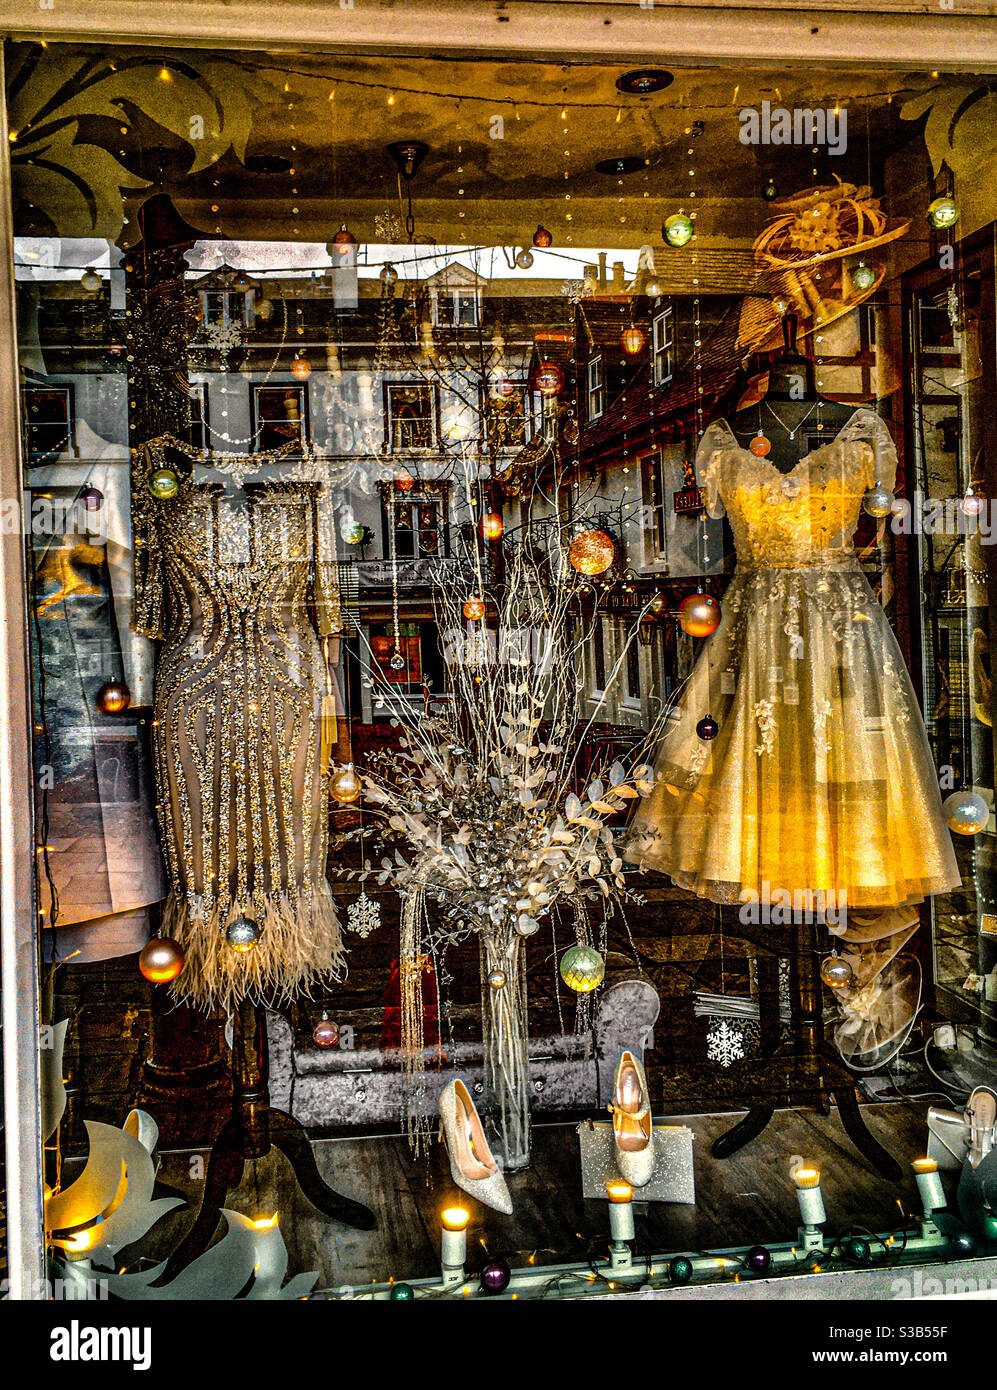 Shop window, glass reflections Stock Photo